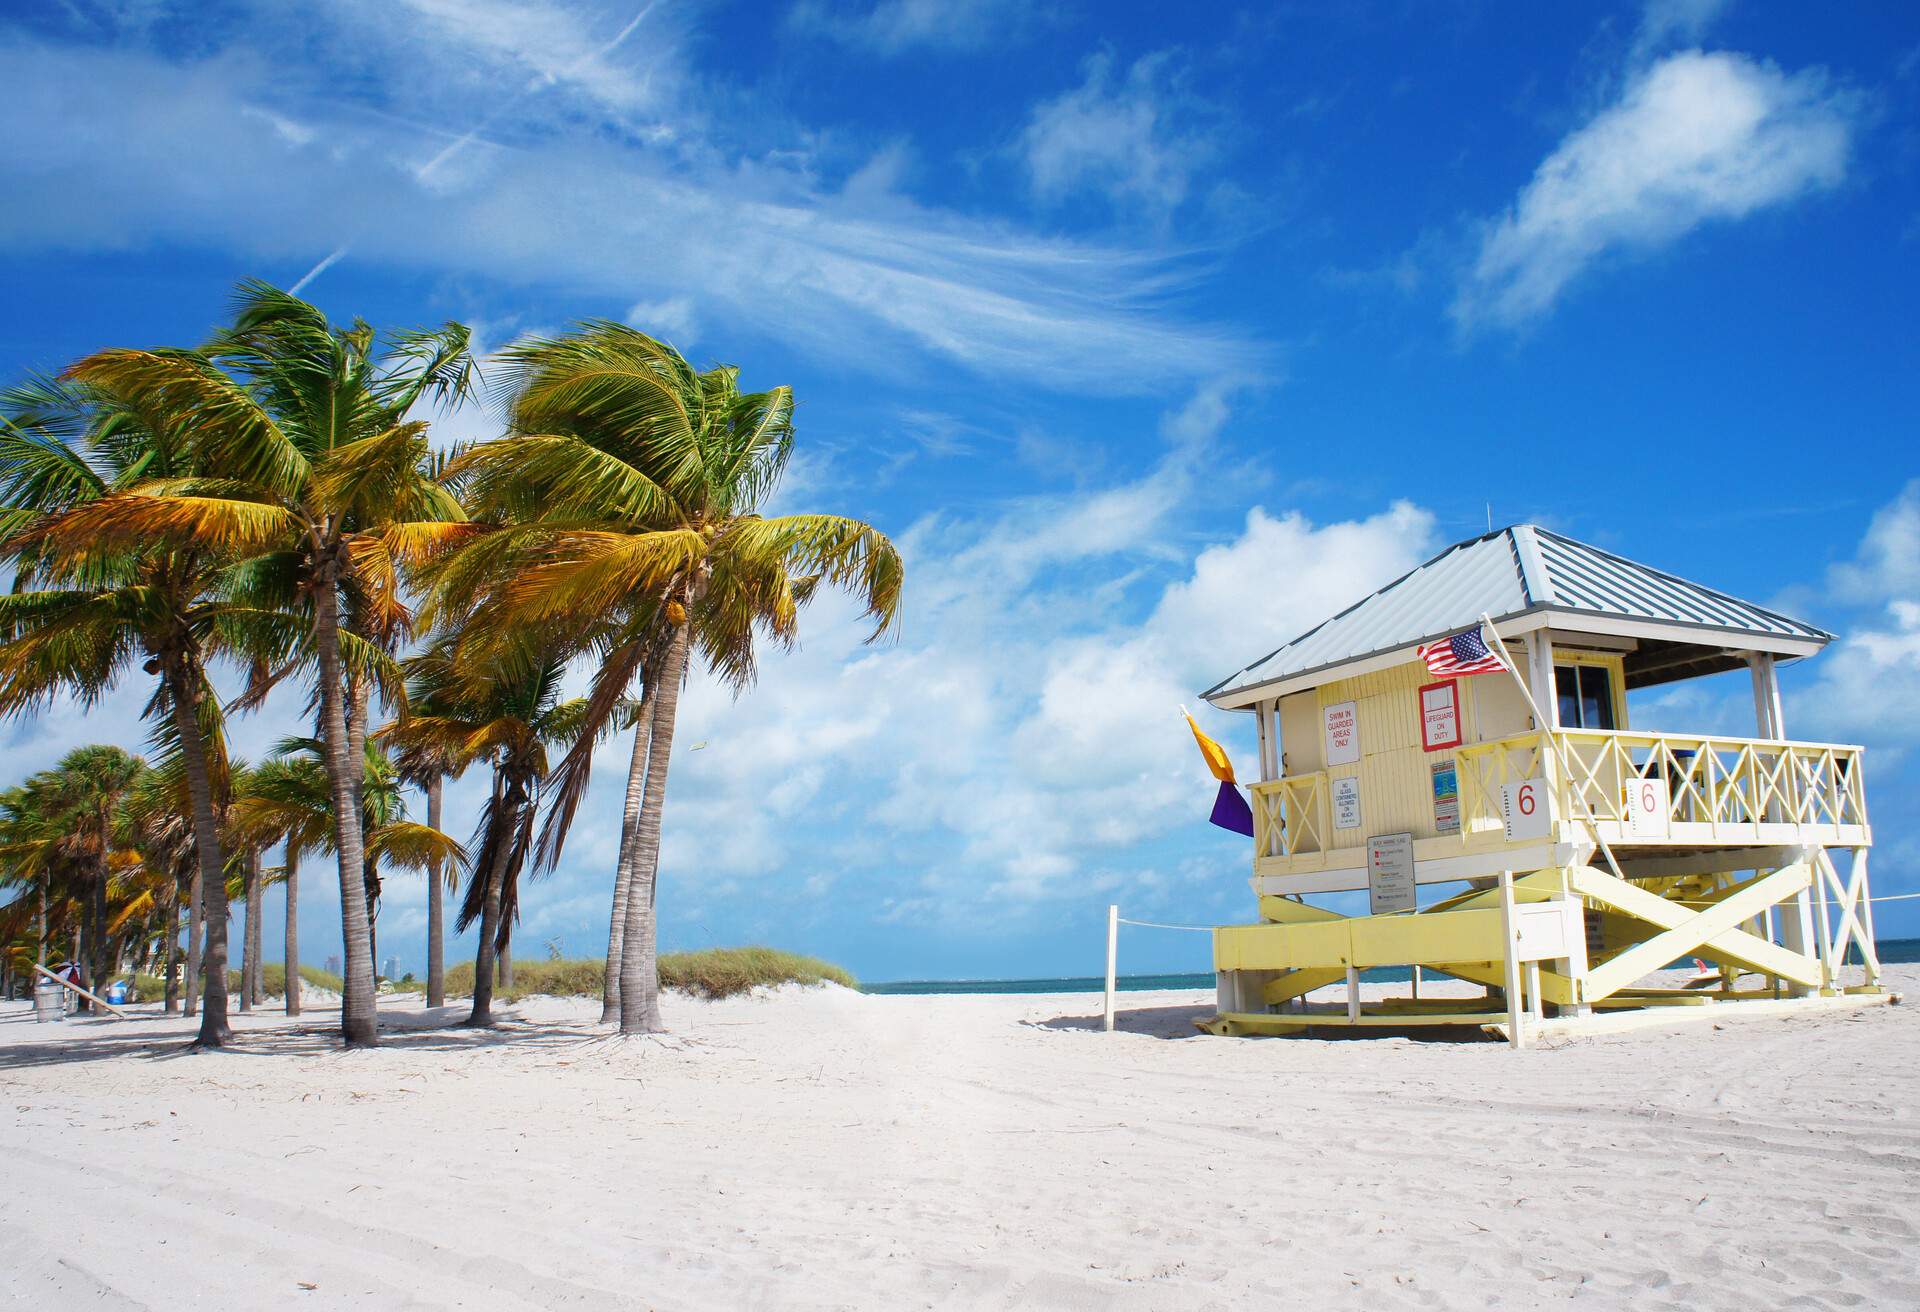 Crandon park Beach of Key Biscayne, Miami, USA
